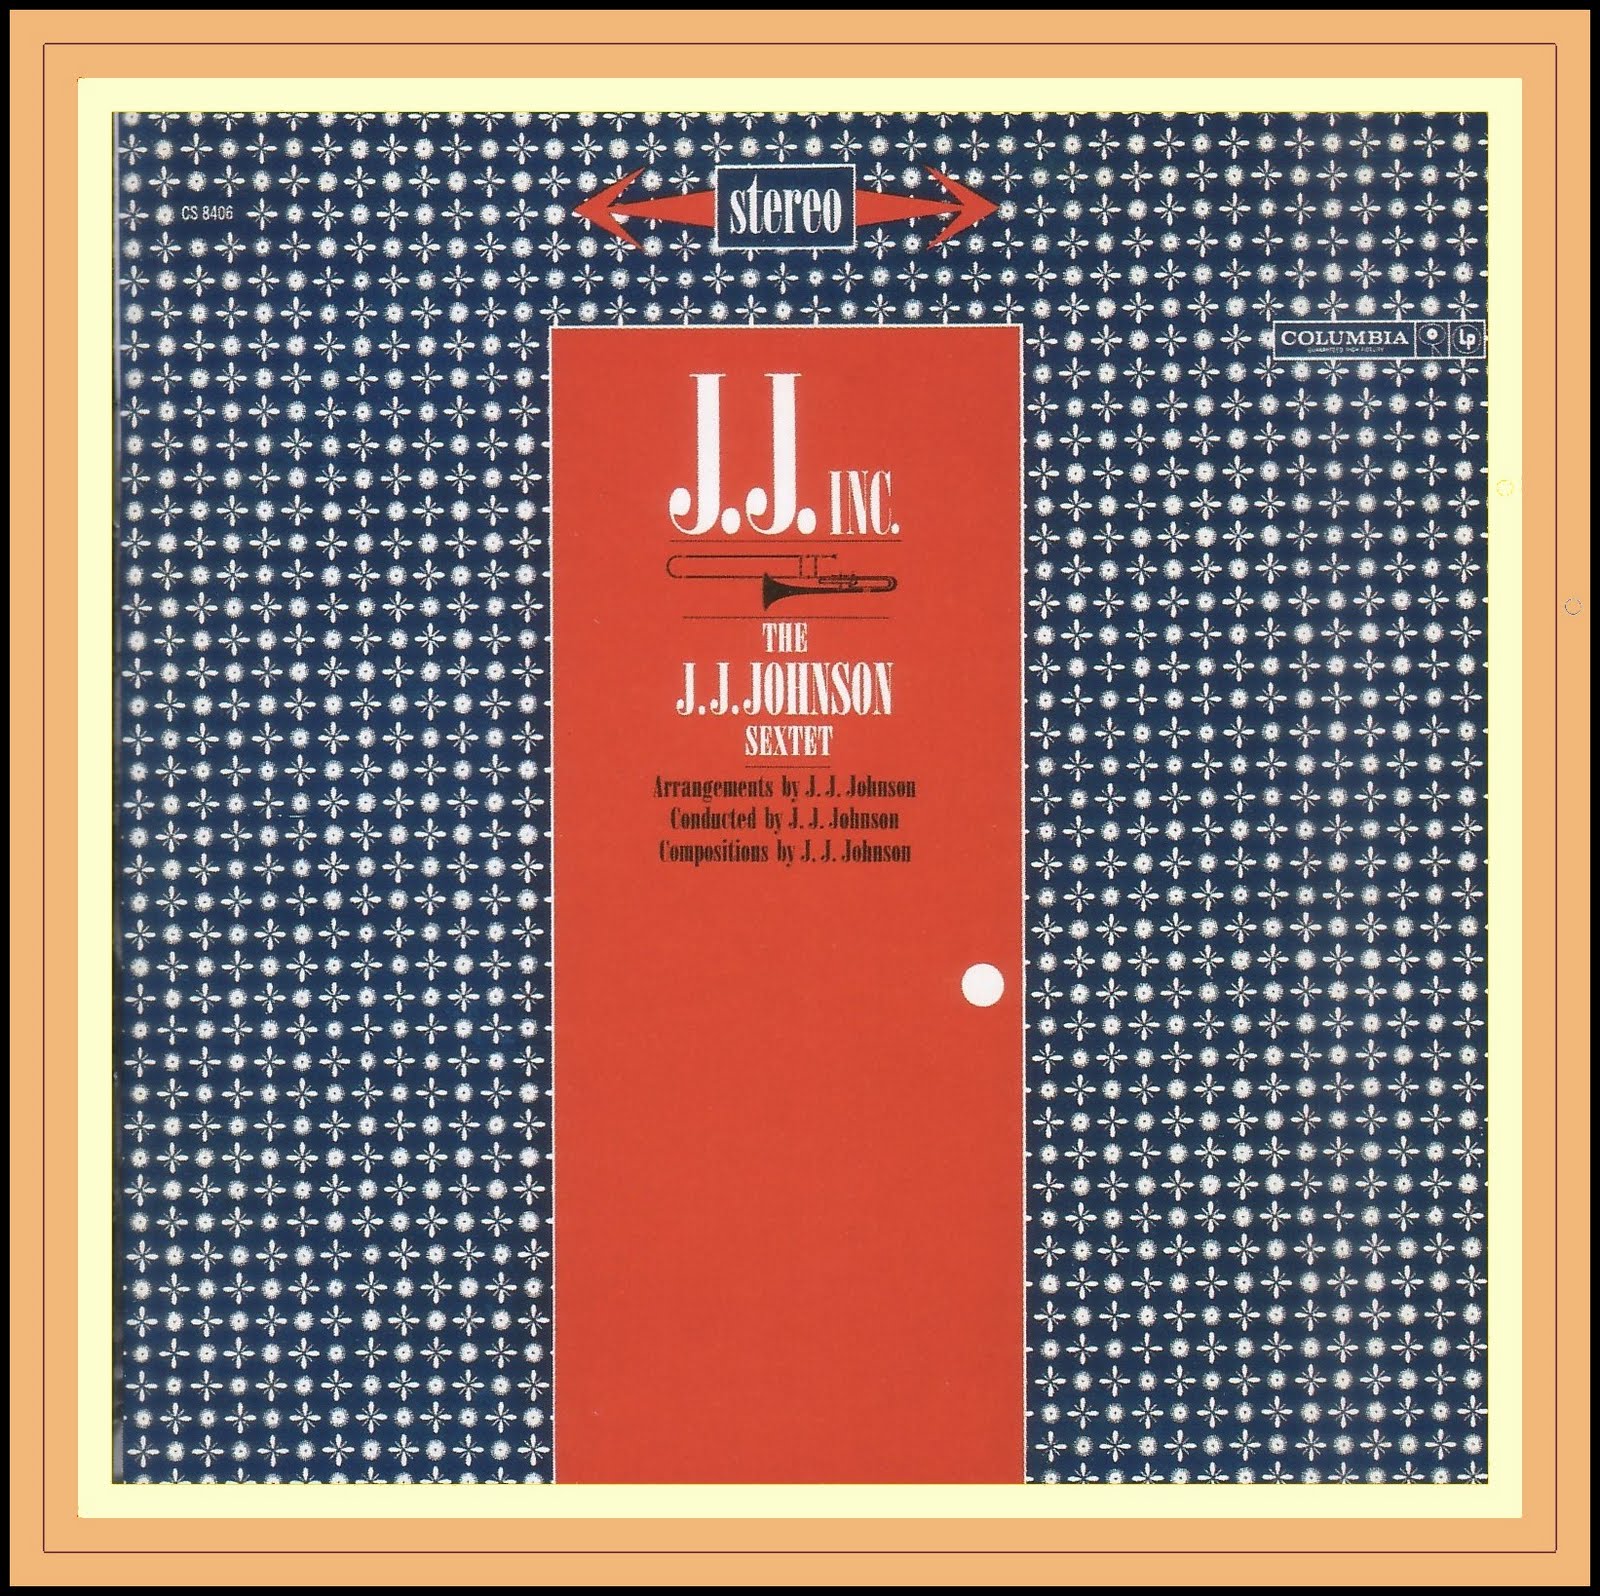 JazzProfiles: J.J. Inc. – A Look at the Music of J.J. Johnson